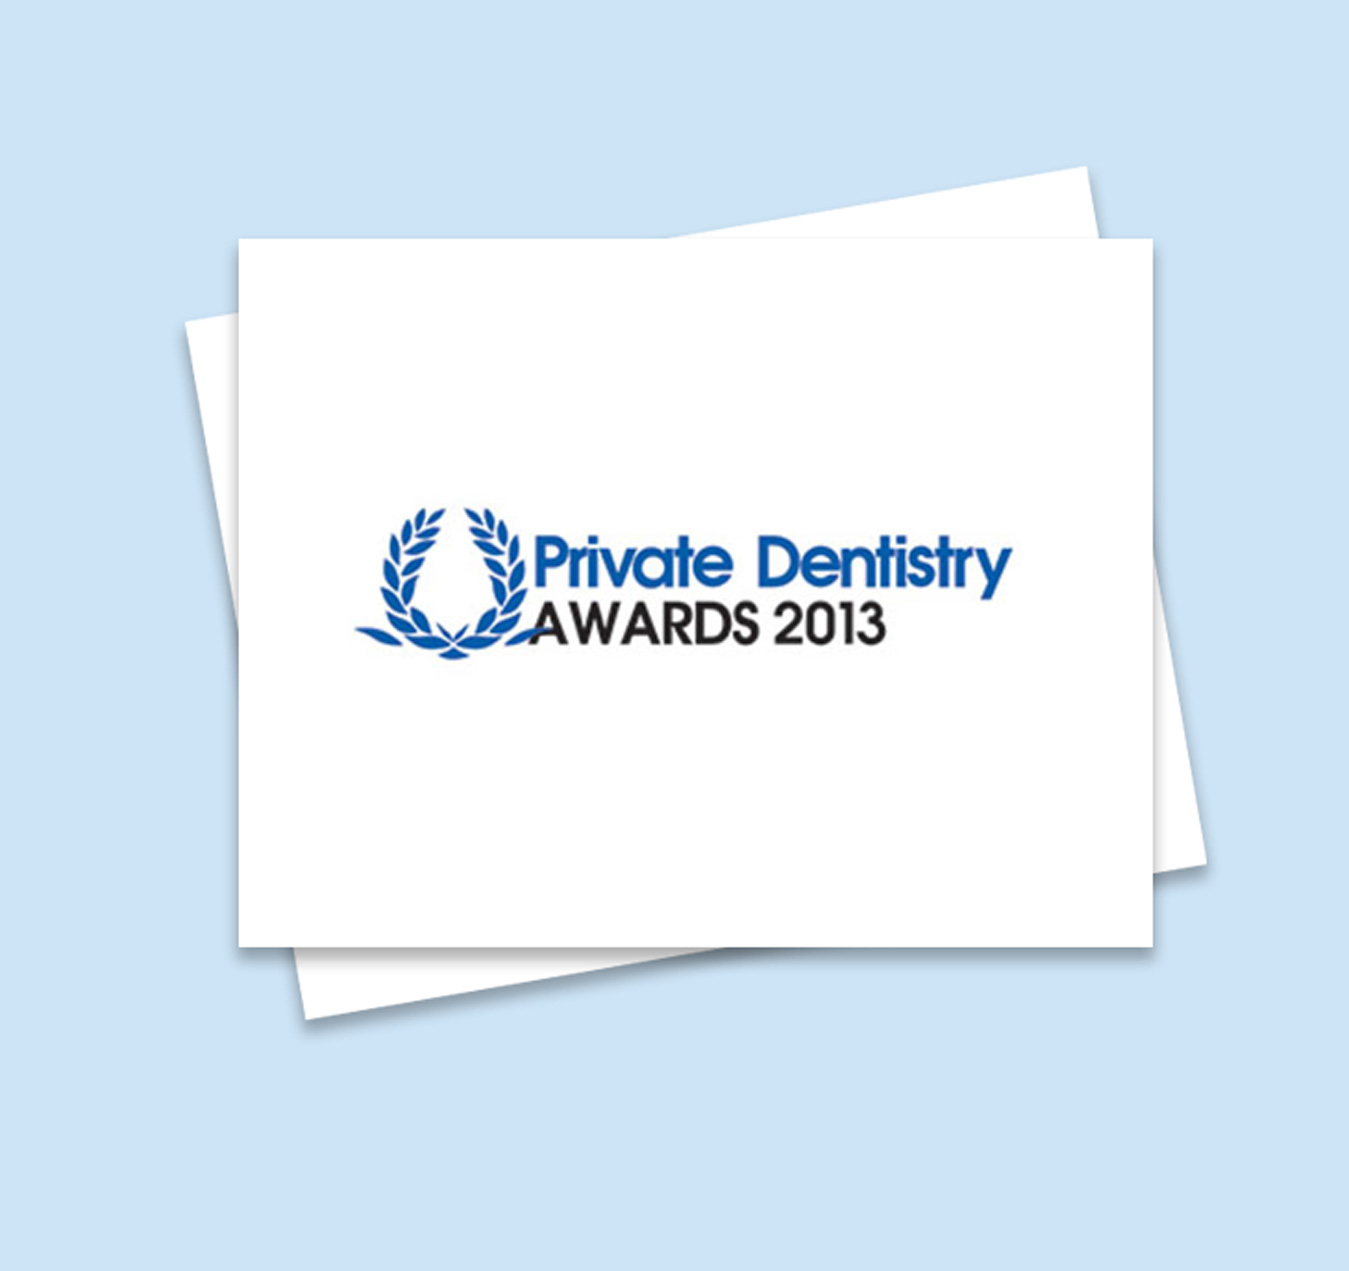 Private Dentistry Awards 2013